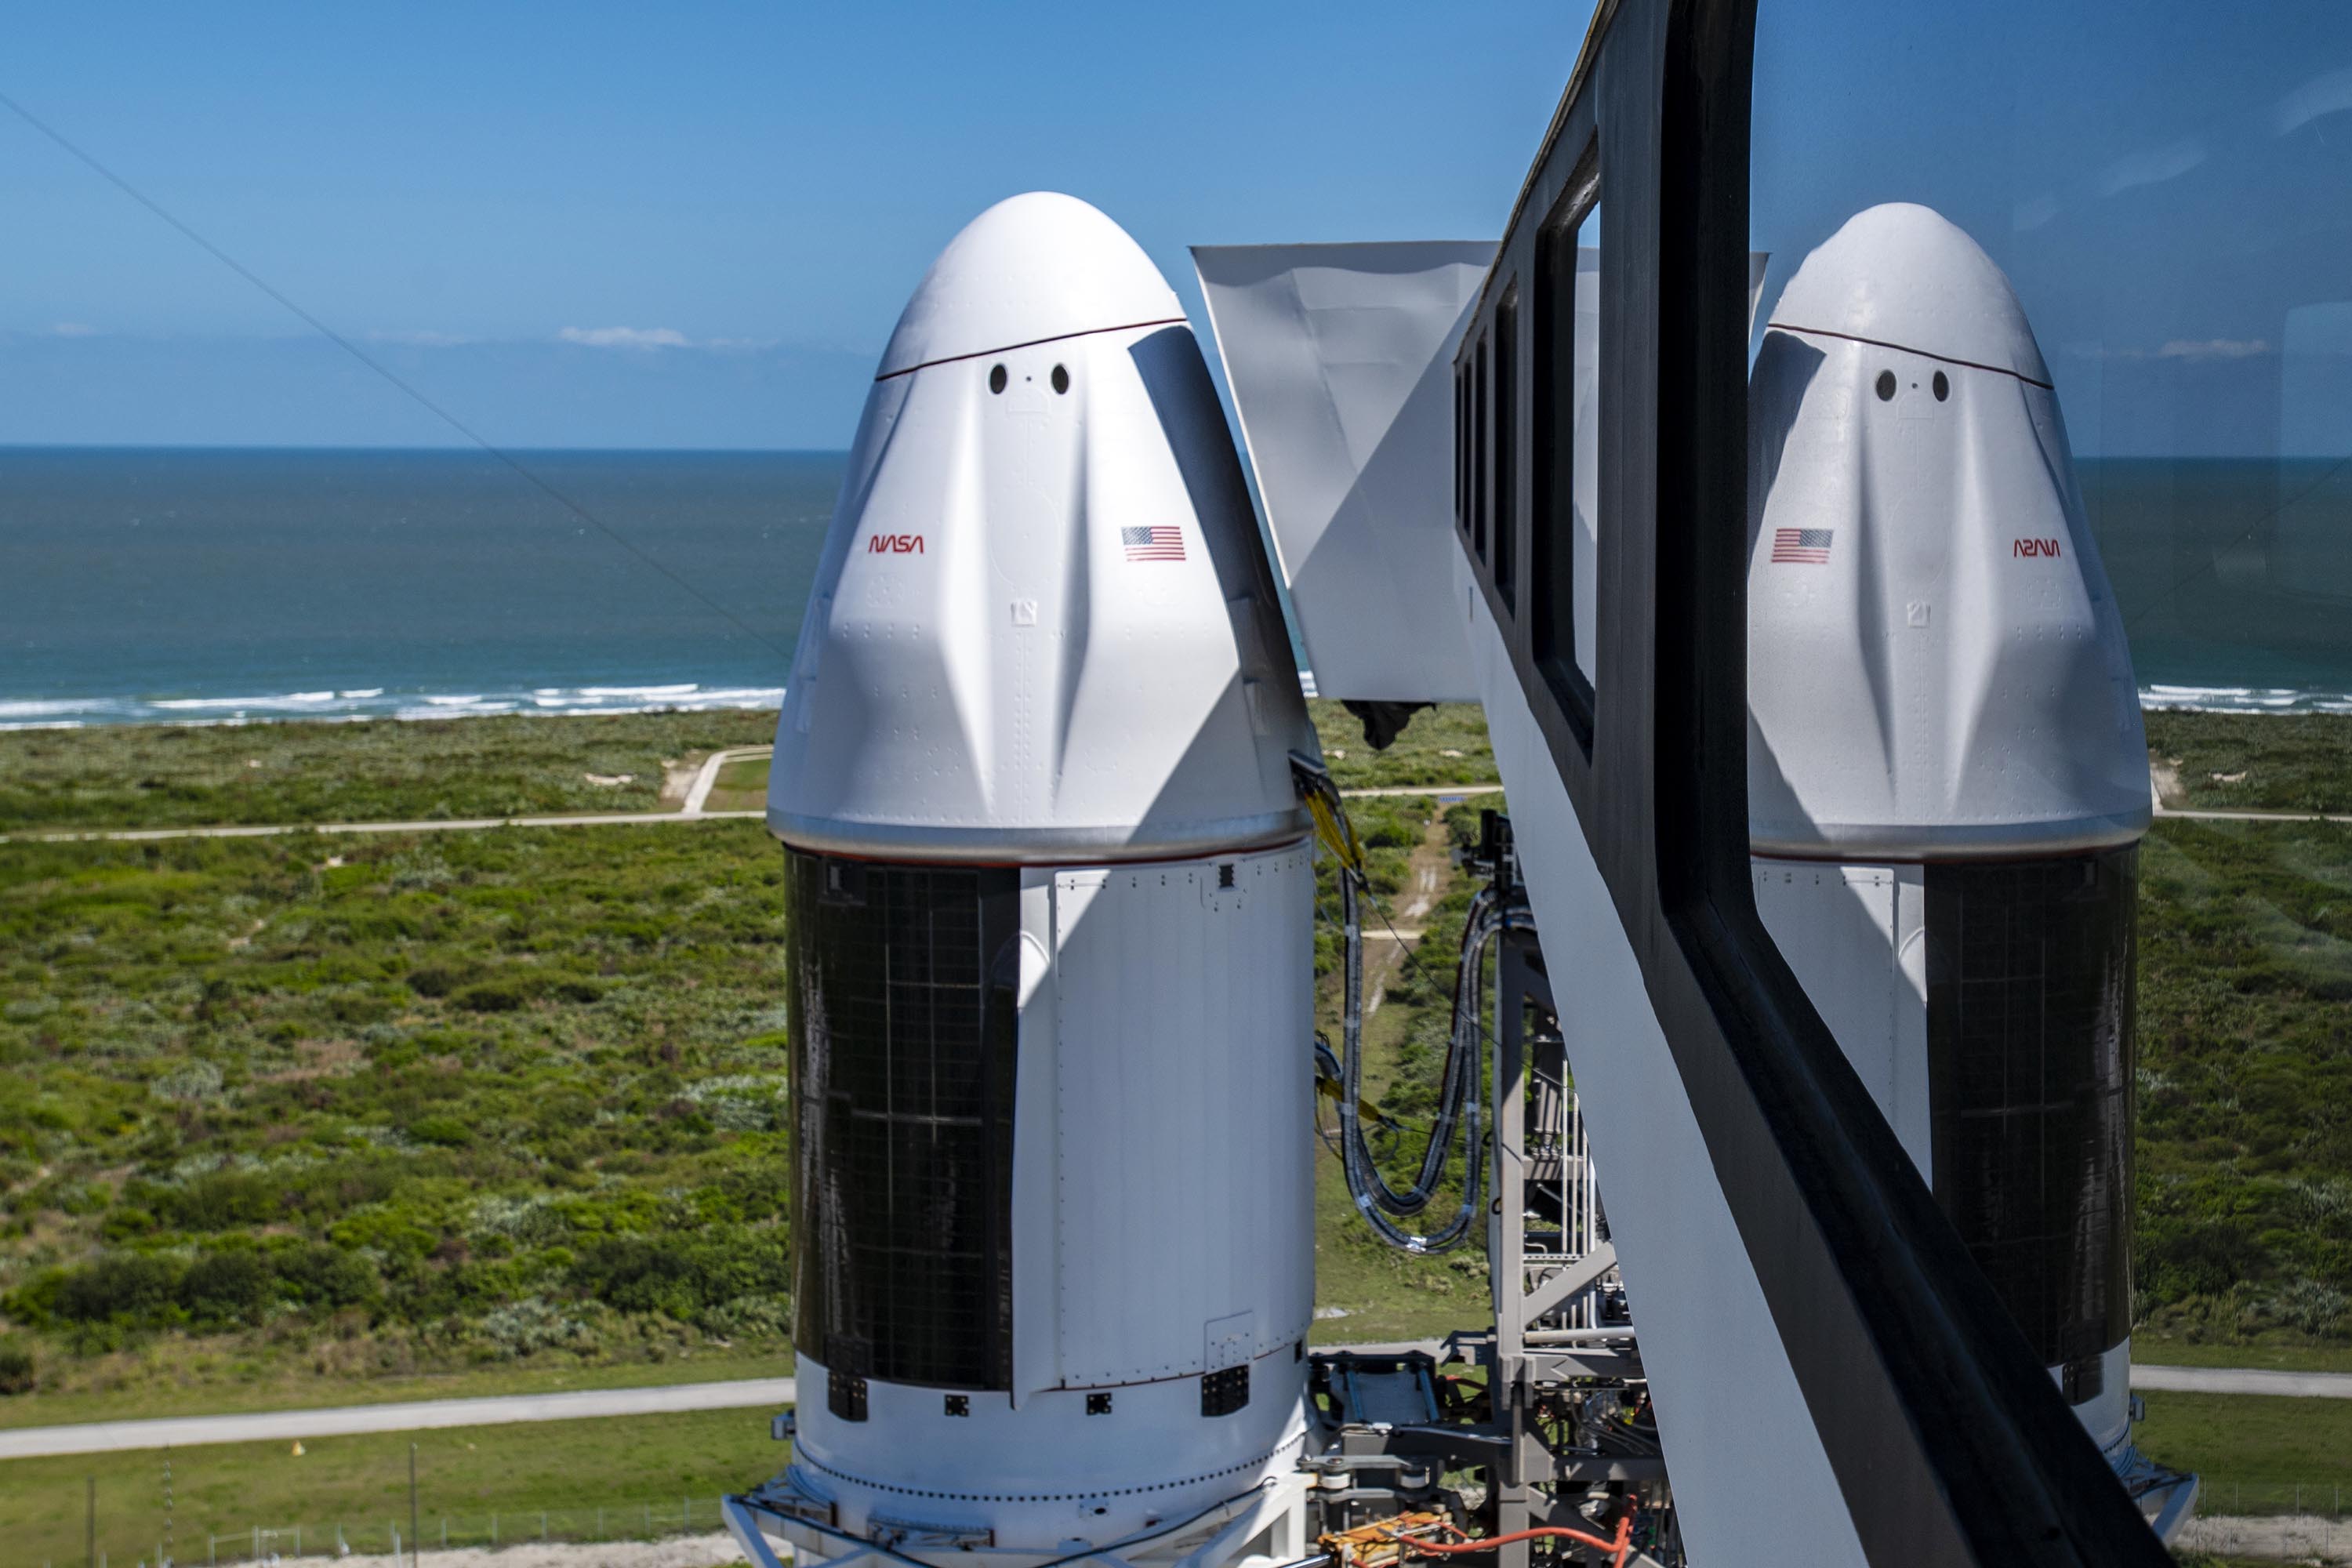 Dragón SpaceX en slc-40